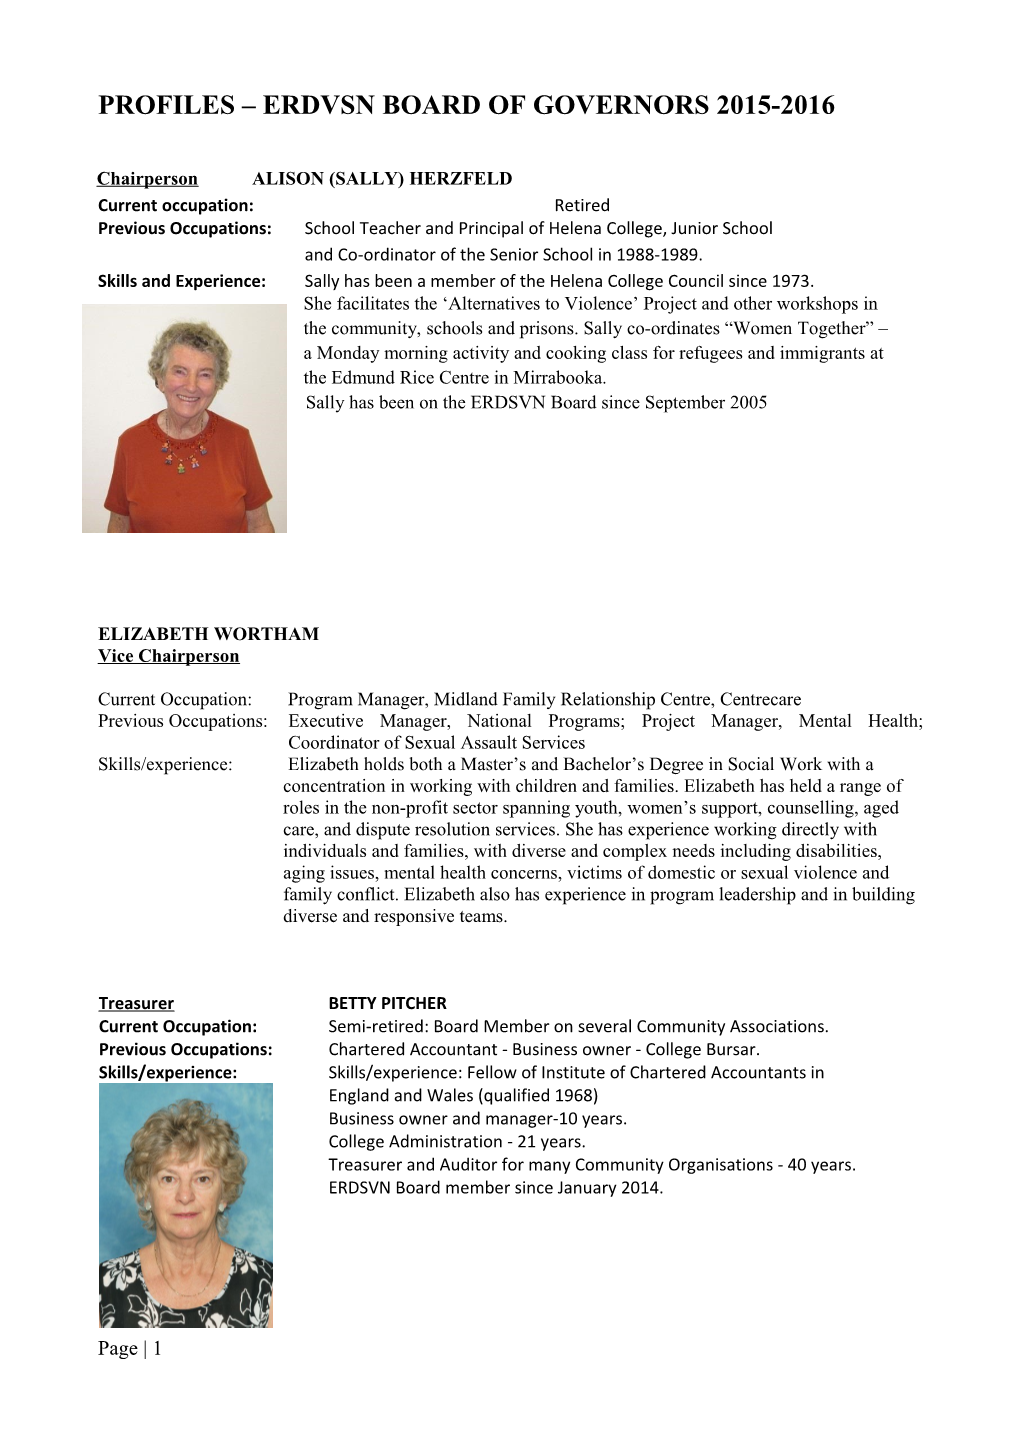 Profiles Erdvsn Board of Governors 2009-2010